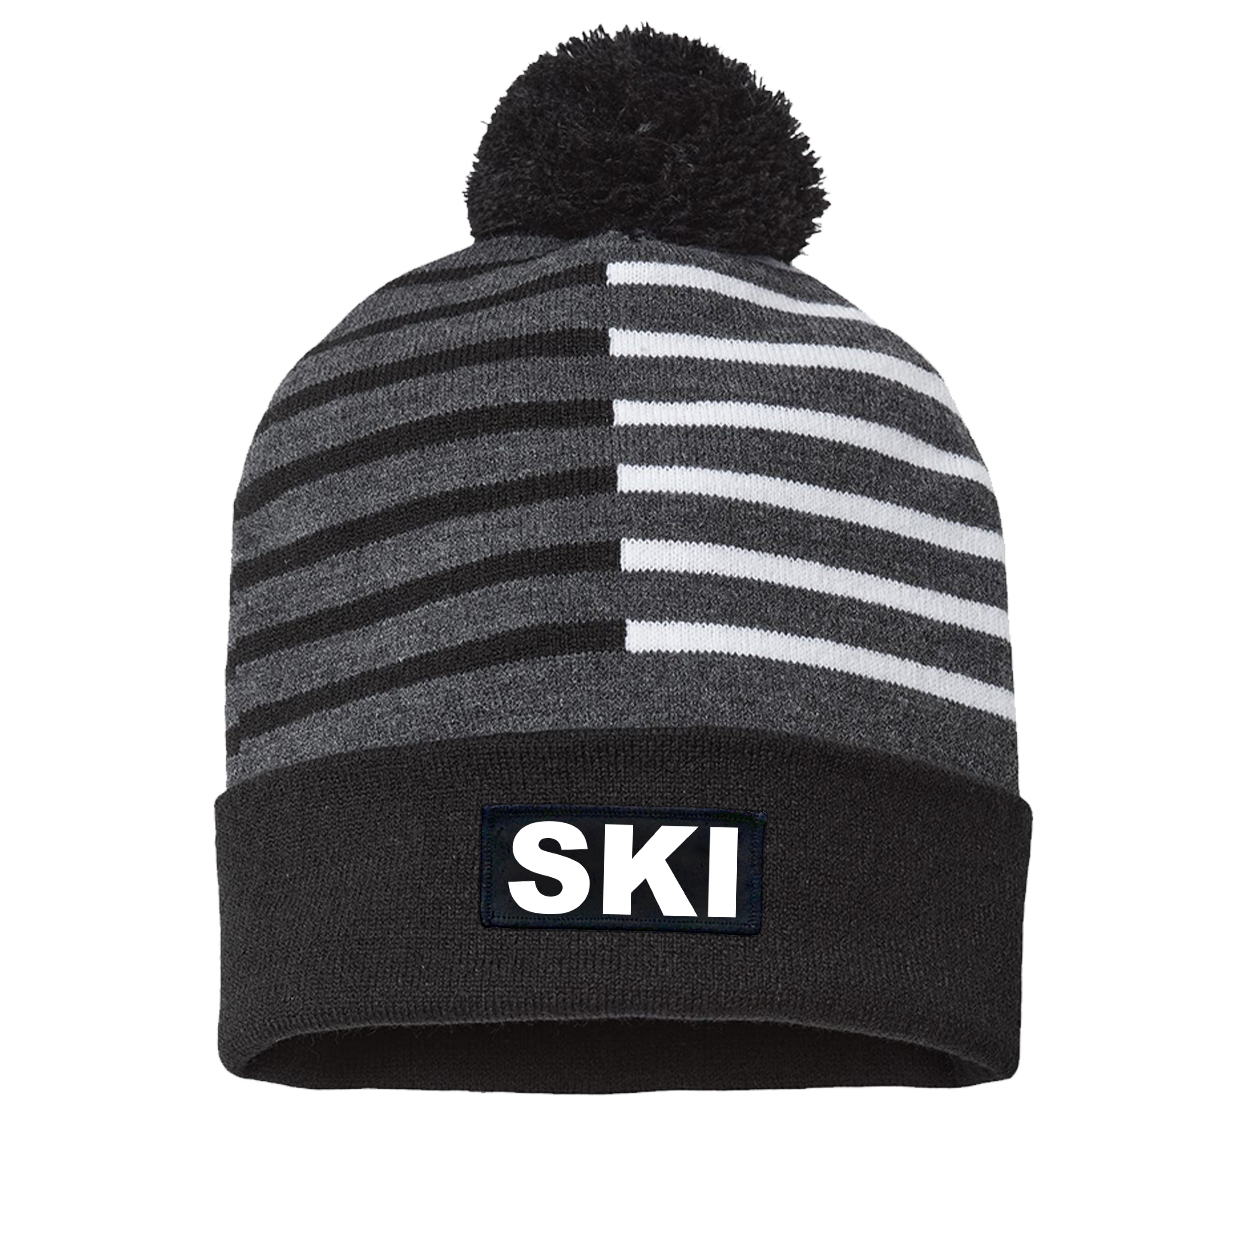 Ski Brand Logo Night Out Woven Patch Roll Up Pom Knit Beanie Half Color Black/White (White Logo)